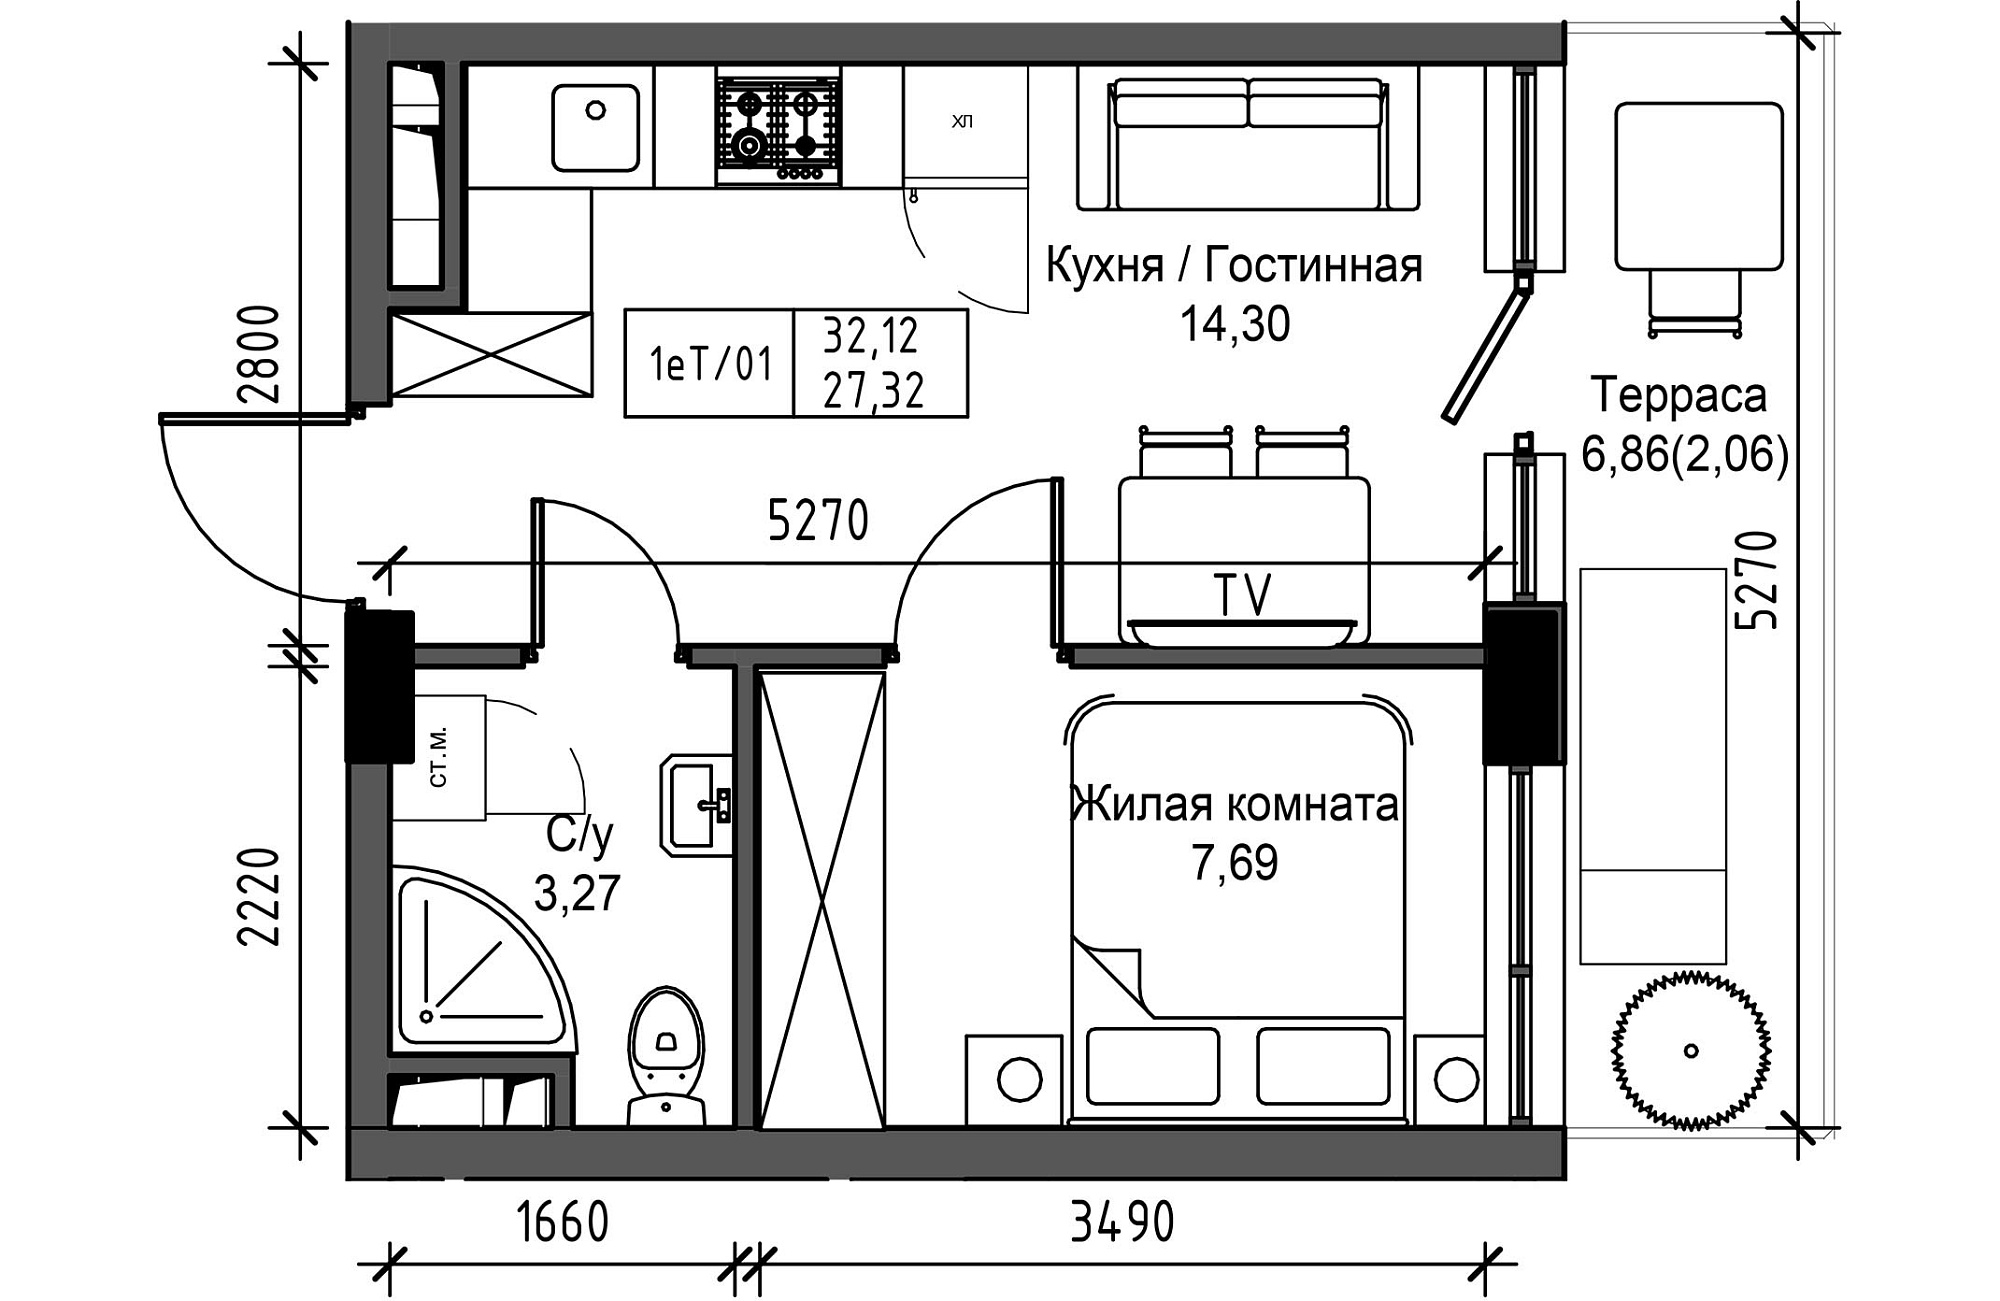 Планування 1-к квартира площею 27.32м2, UM-003-03/0004.